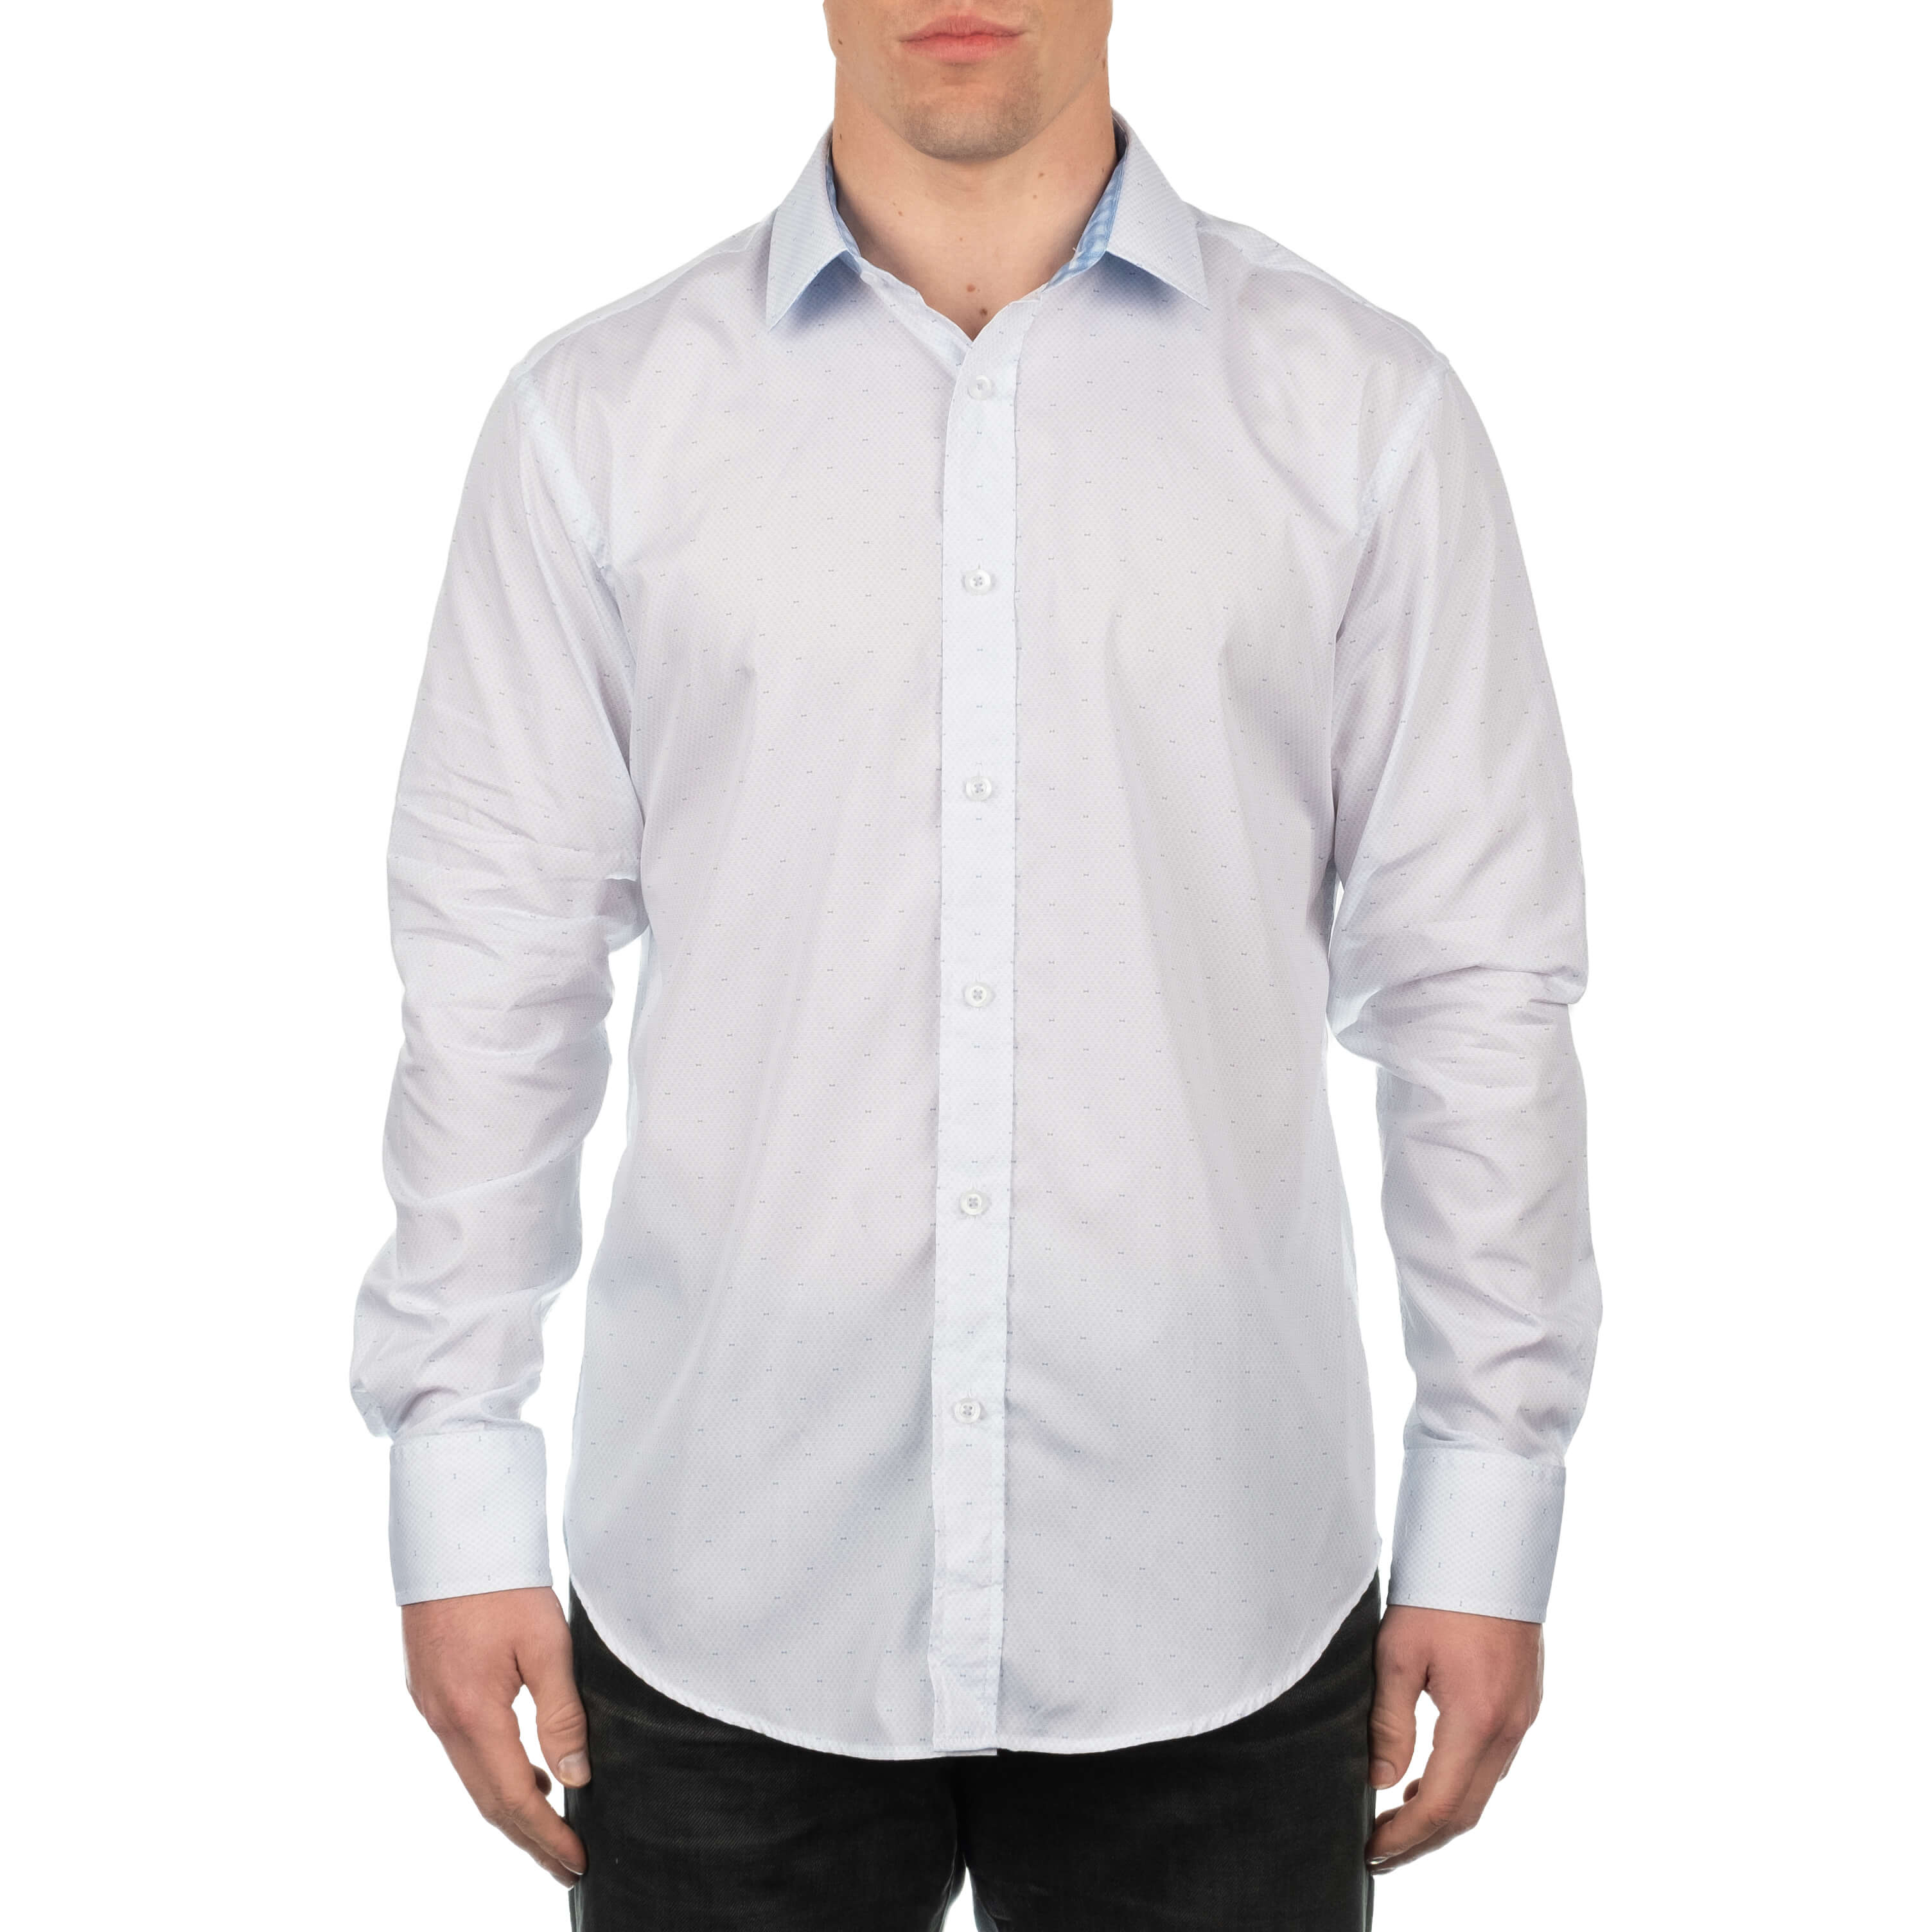 Riverside Men's Long Sleeve White Geo-Print Shirt - QUIETI